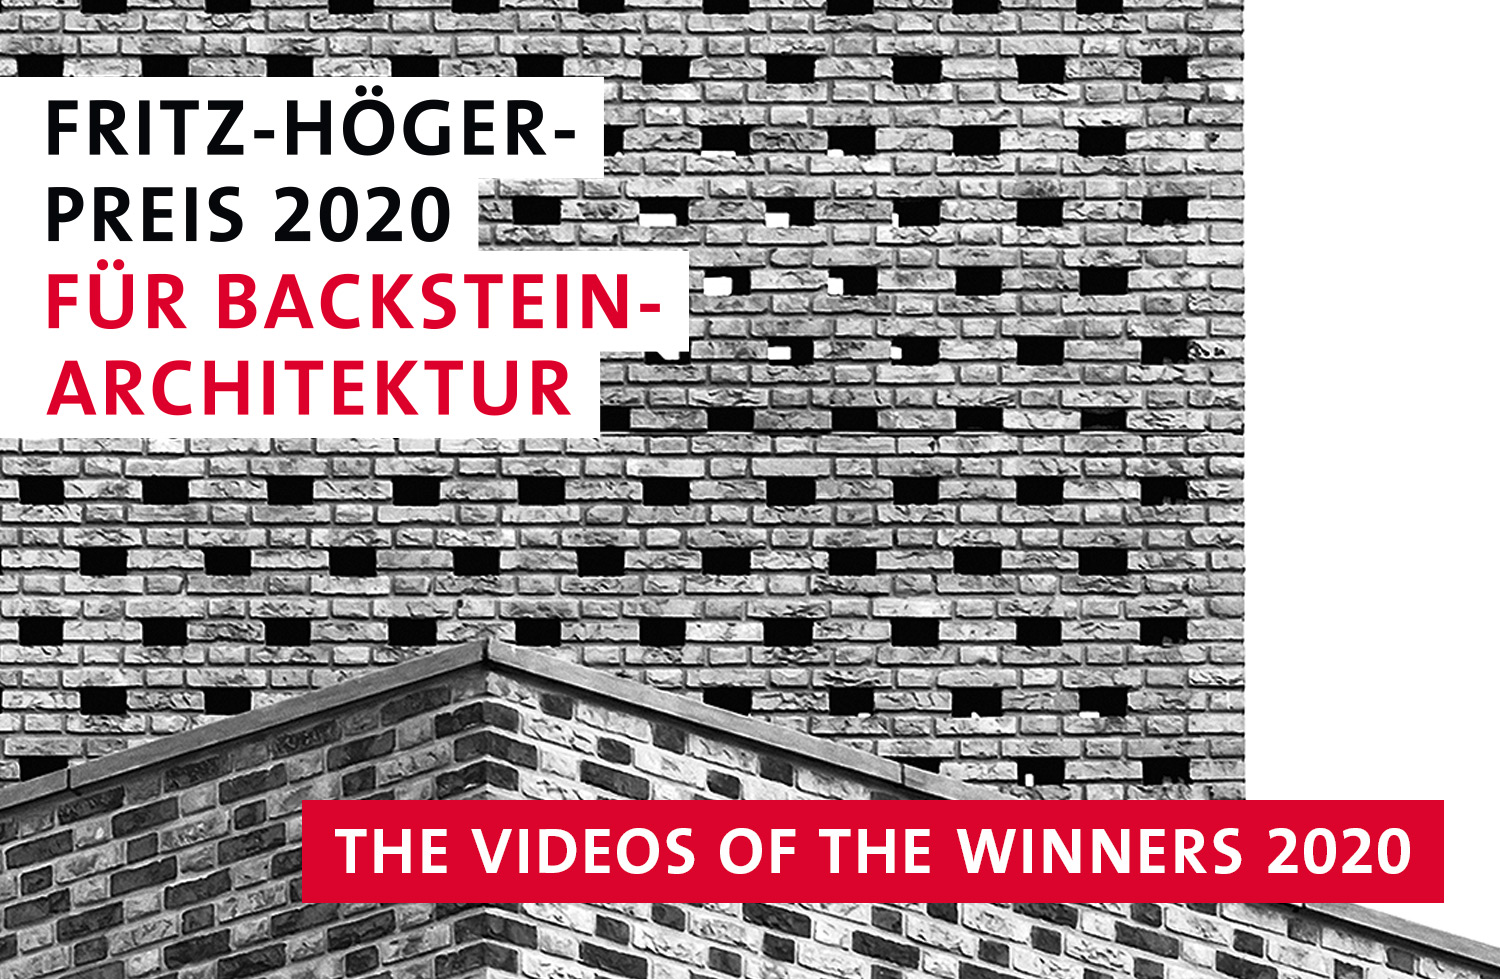 The Winners Videos 2020